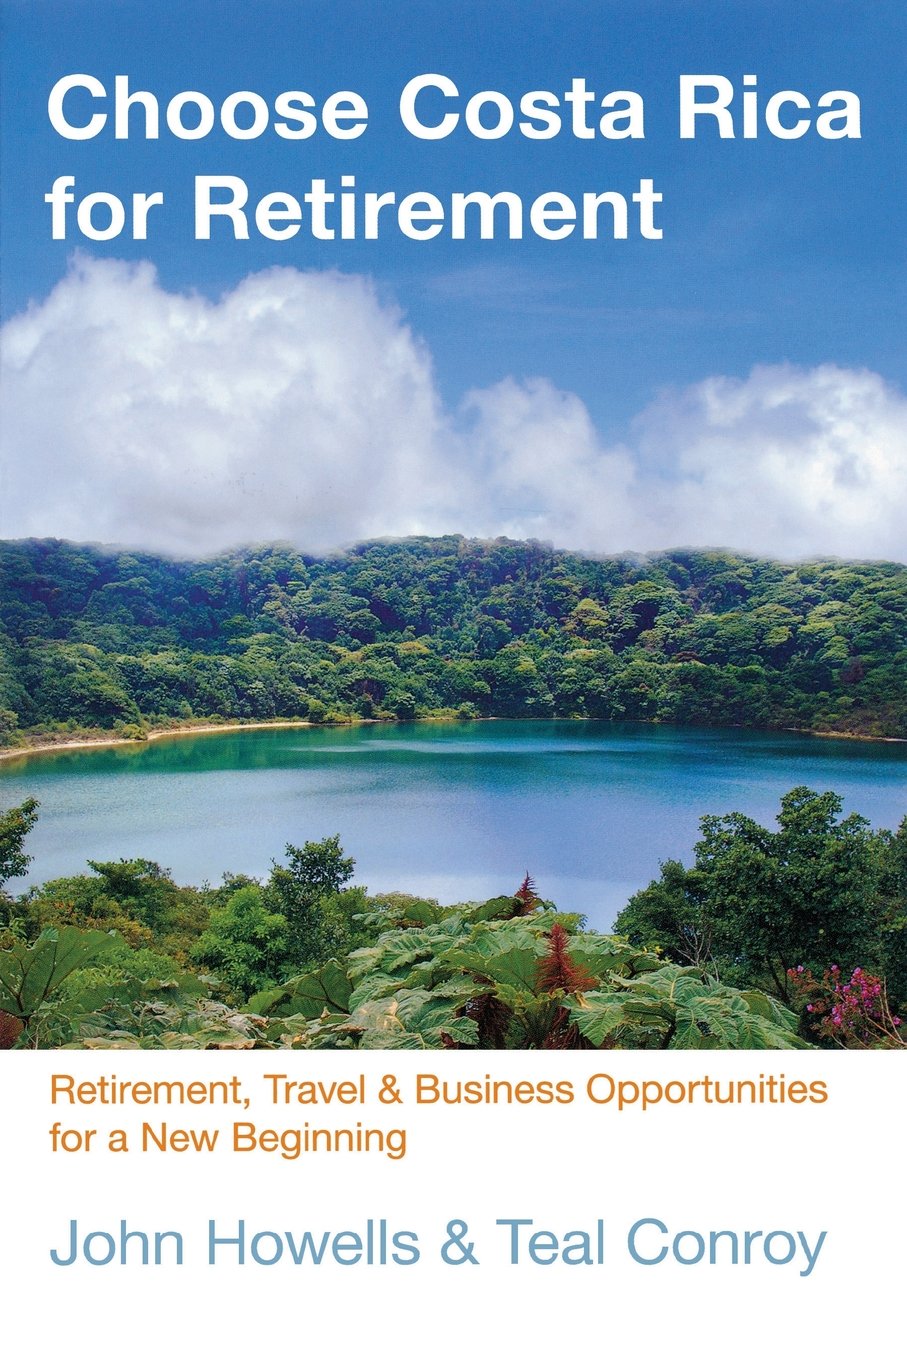 Book: Choose Costa Rica for Retirement